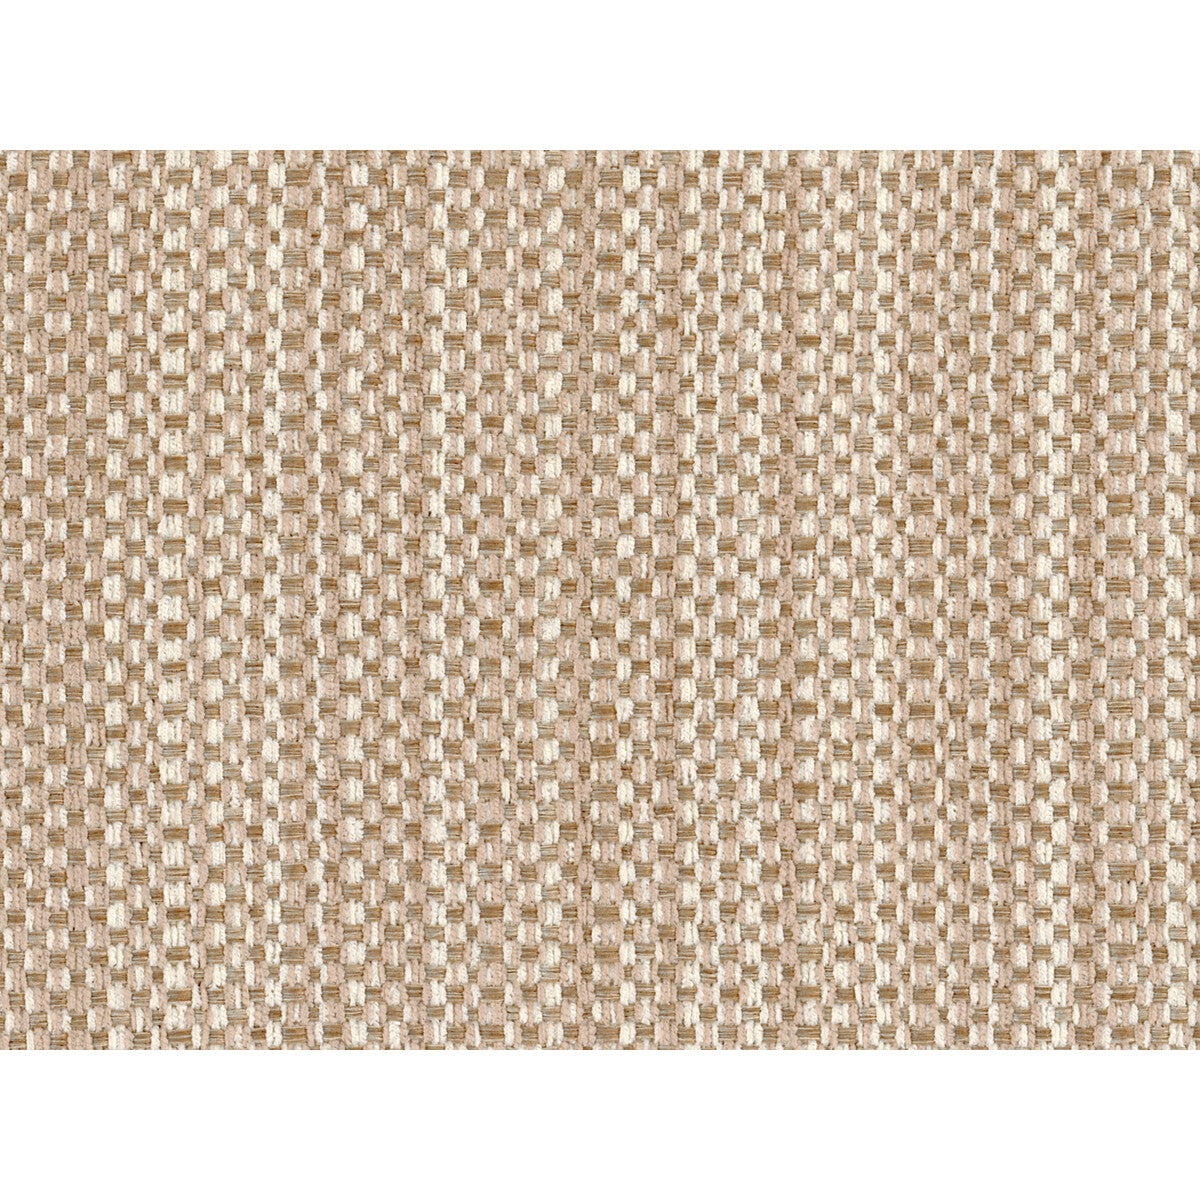 Kravet Smart fabric in 34363-16 color - pattern 34363.16.0 - by Kravet Smart